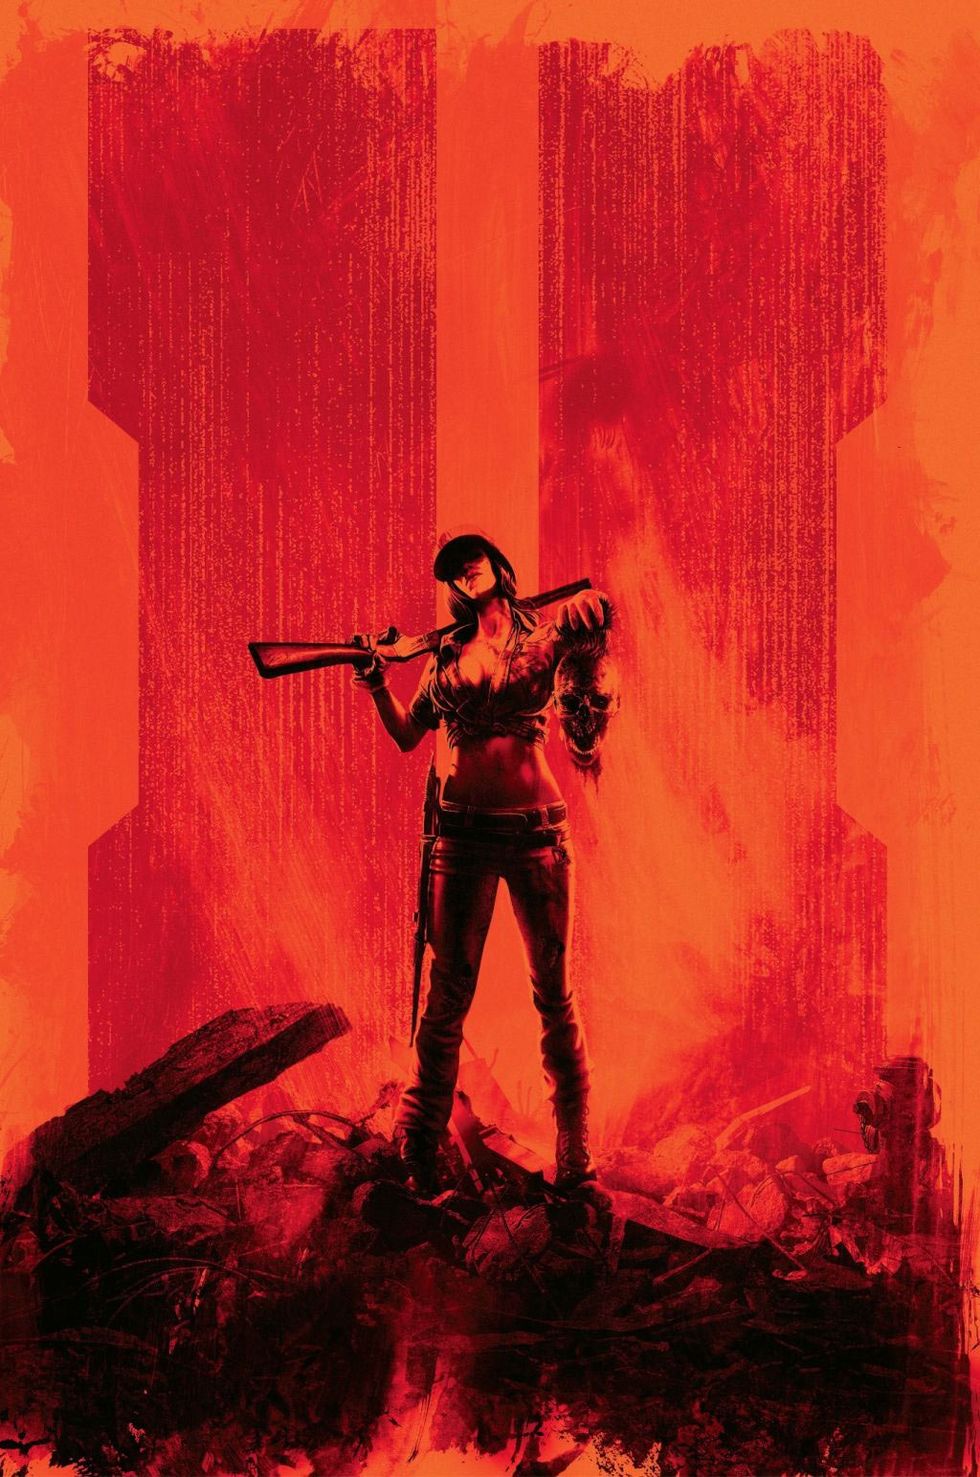 Poster Call Of Duty Black Ops 2 C - Pop Arte Skins